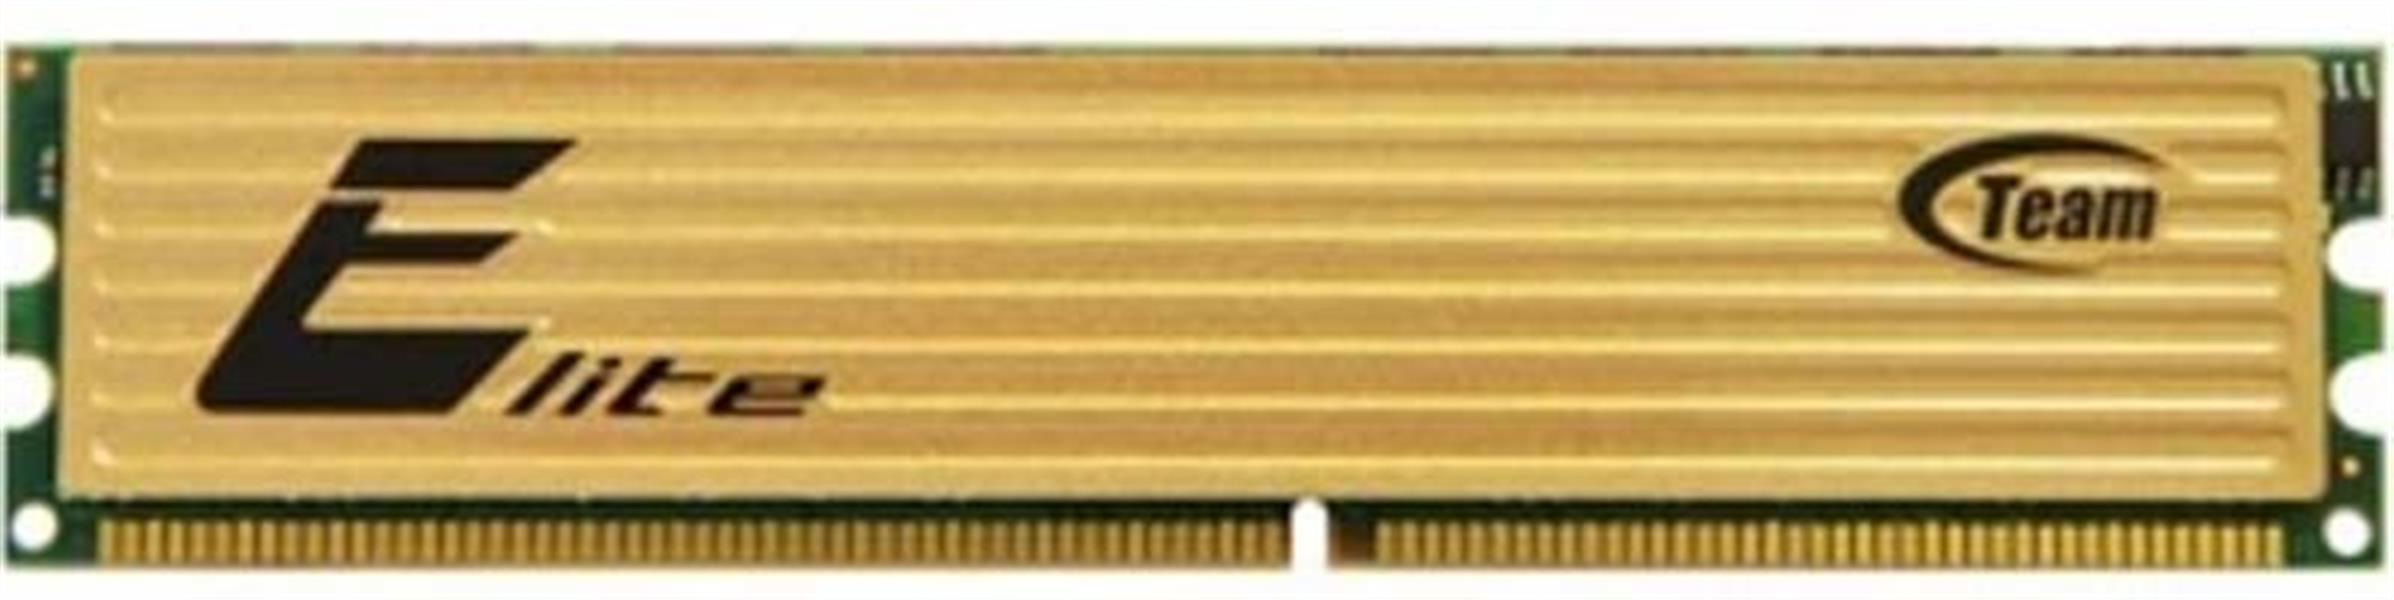 Team Elite RAM 1 GB DDR 400 PC3200 C3-4-4-8 heatspreaders***